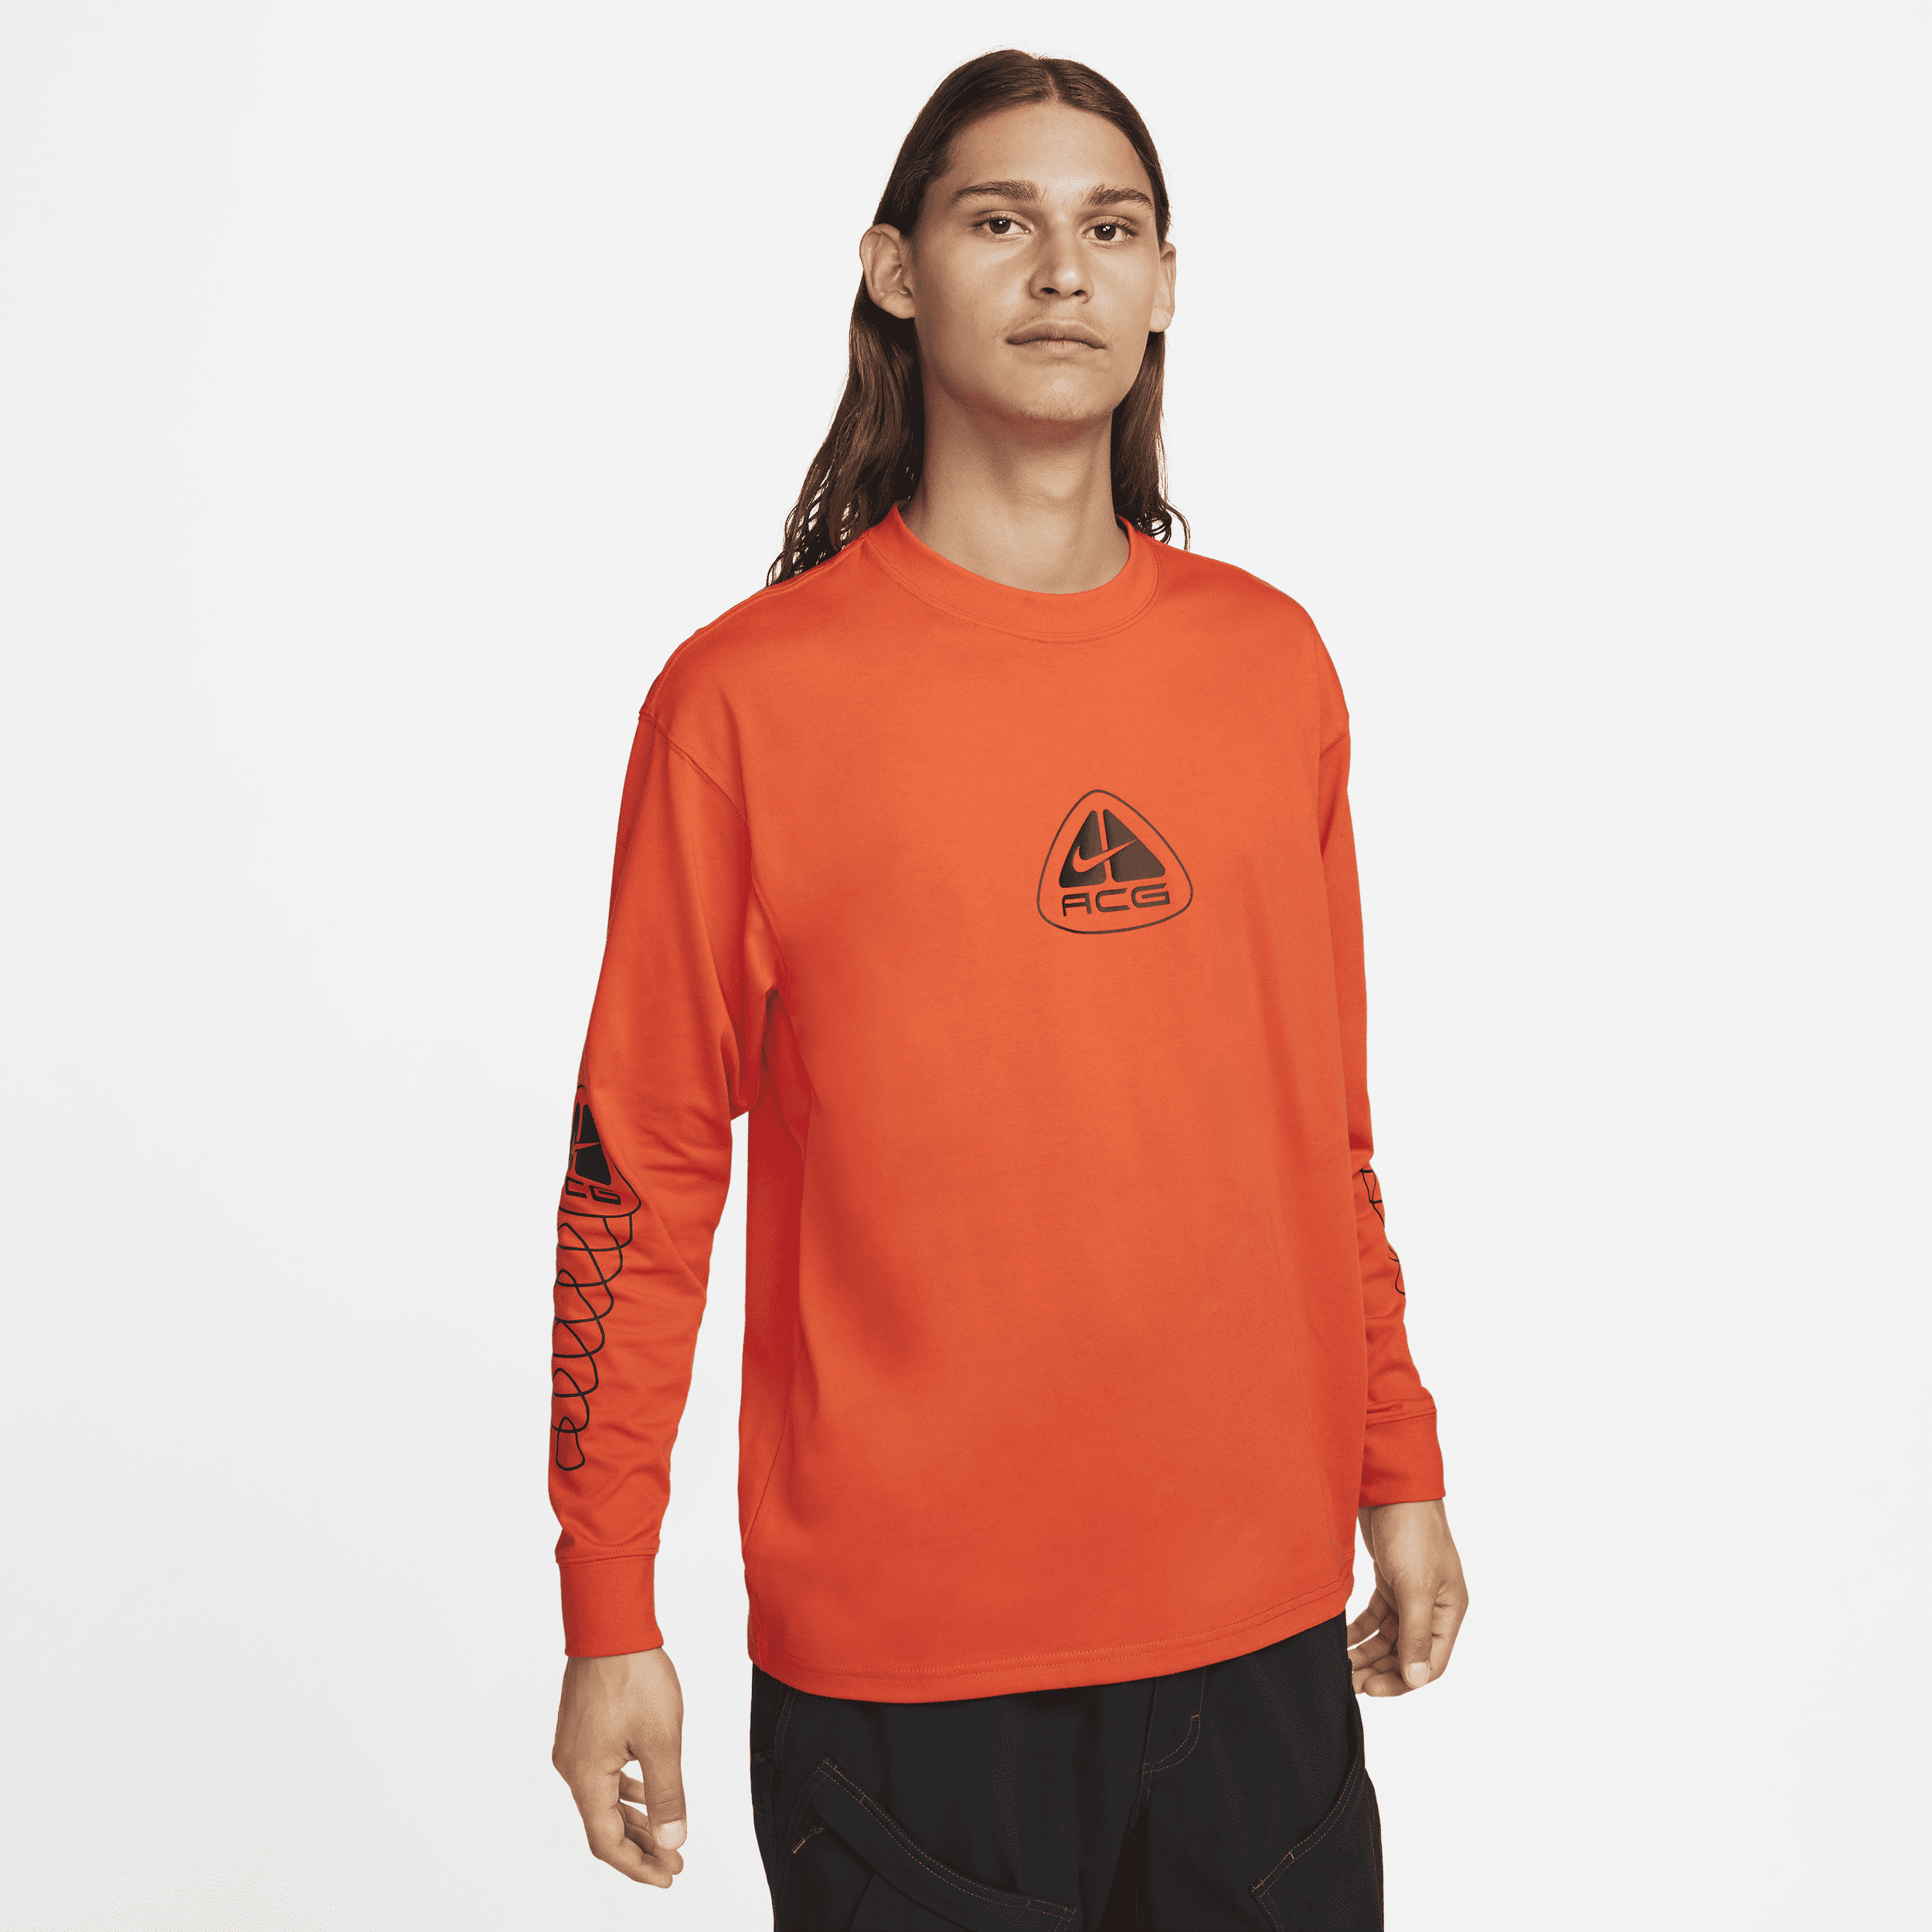 Langærmet Nike ACG-T-shirt til mænd - rød